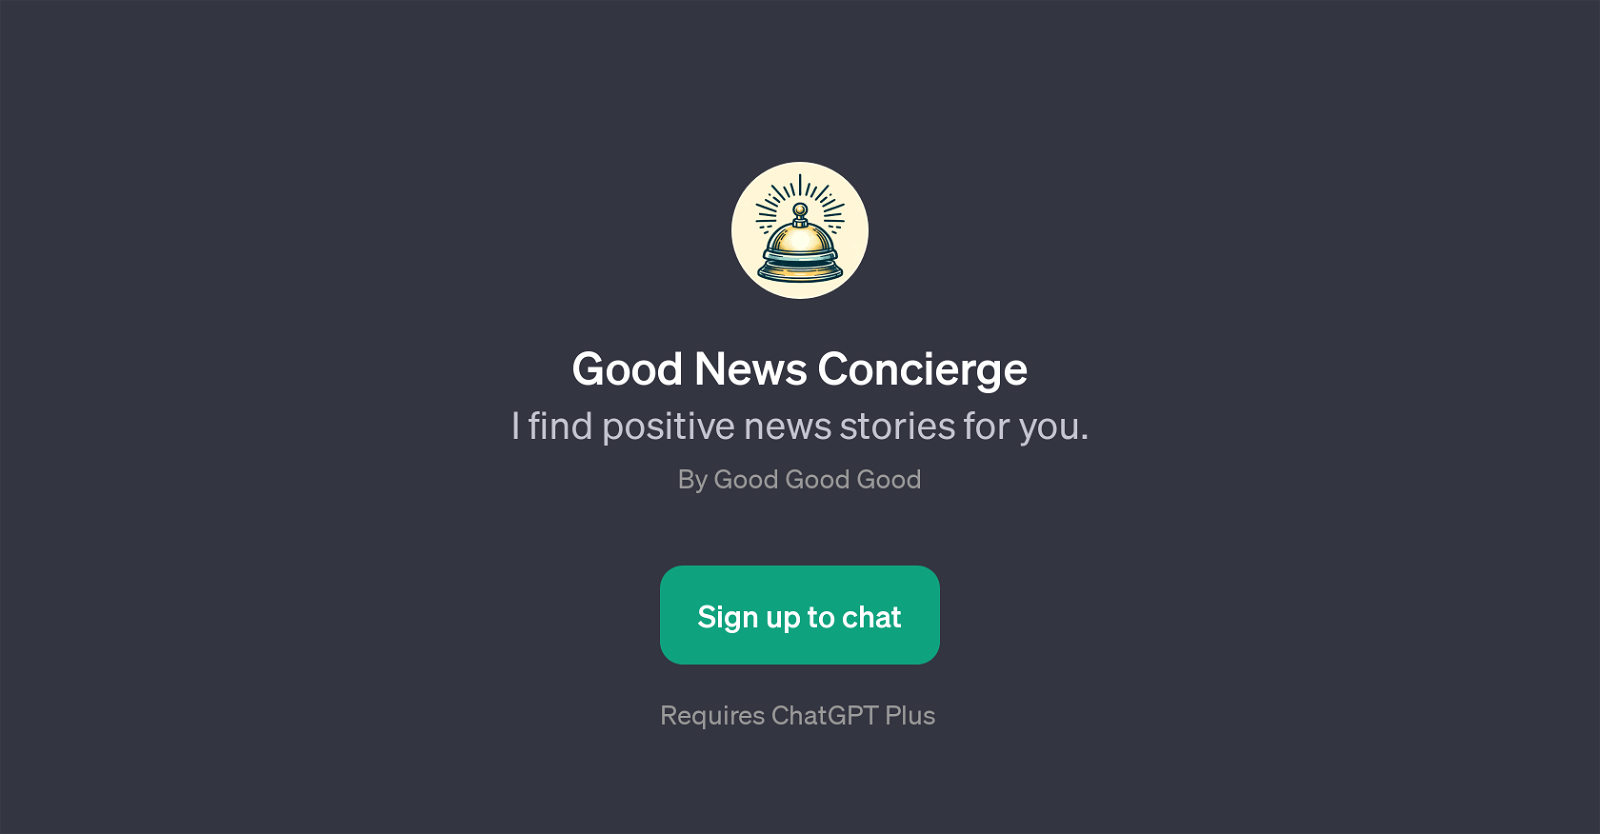 Good News Concierge website